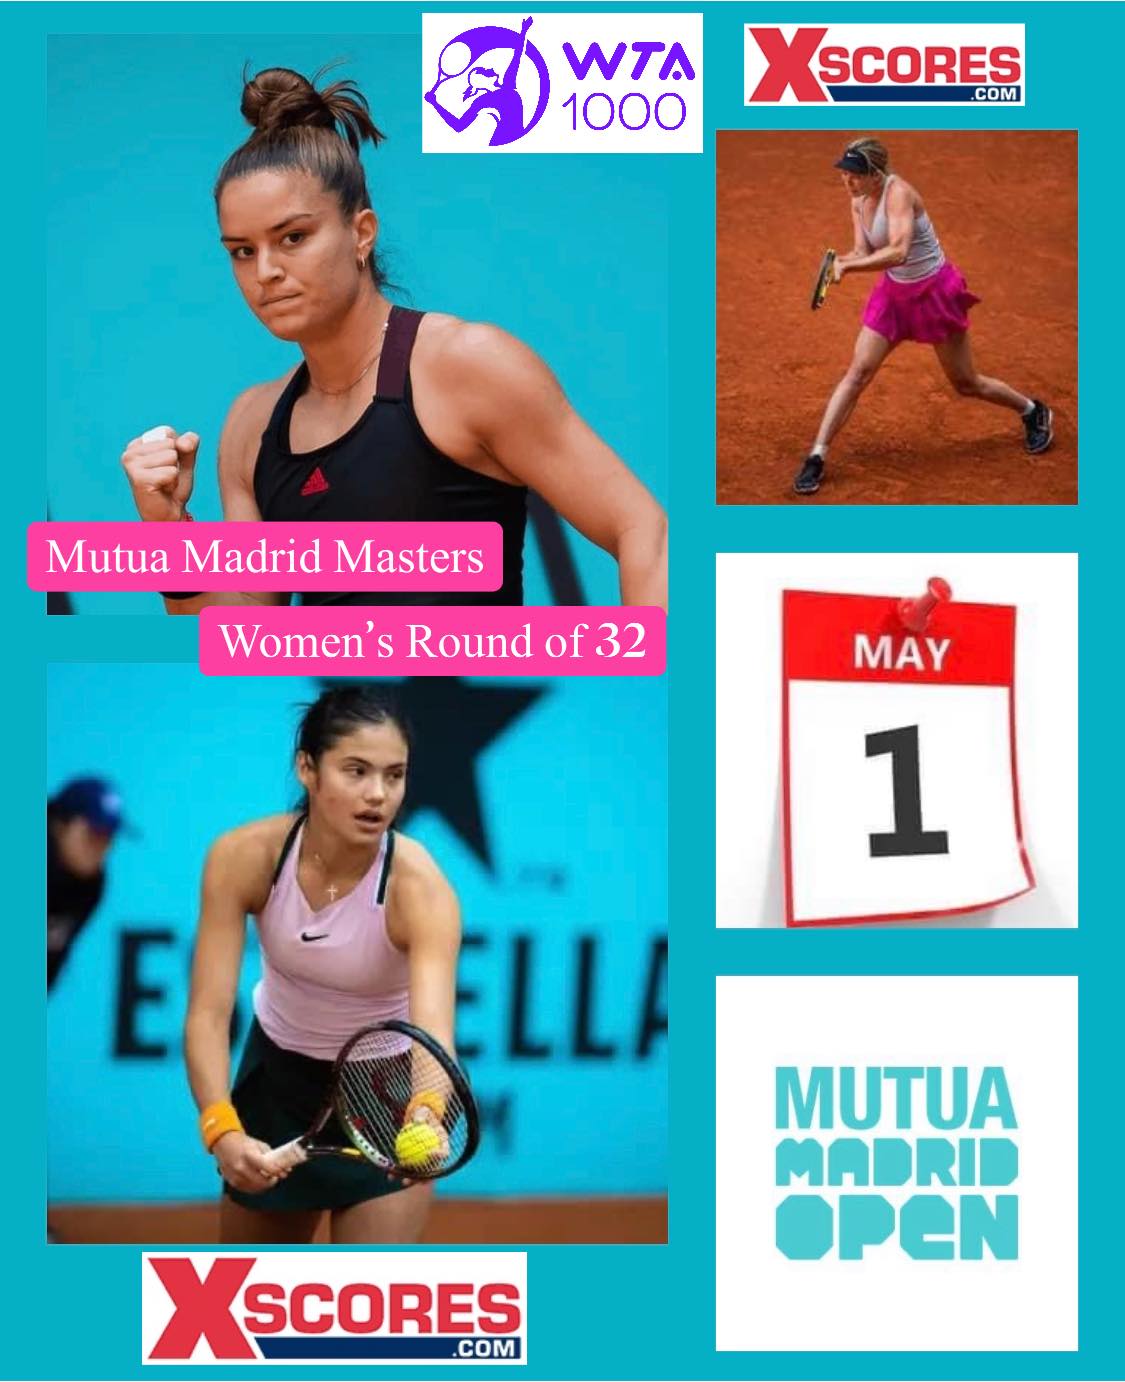 🎾🎾Tennis- WTA Tour 1000 – Surface Outdoor Clay – Mutua Madrid Open, MADRID, SPAIN🎾🎾